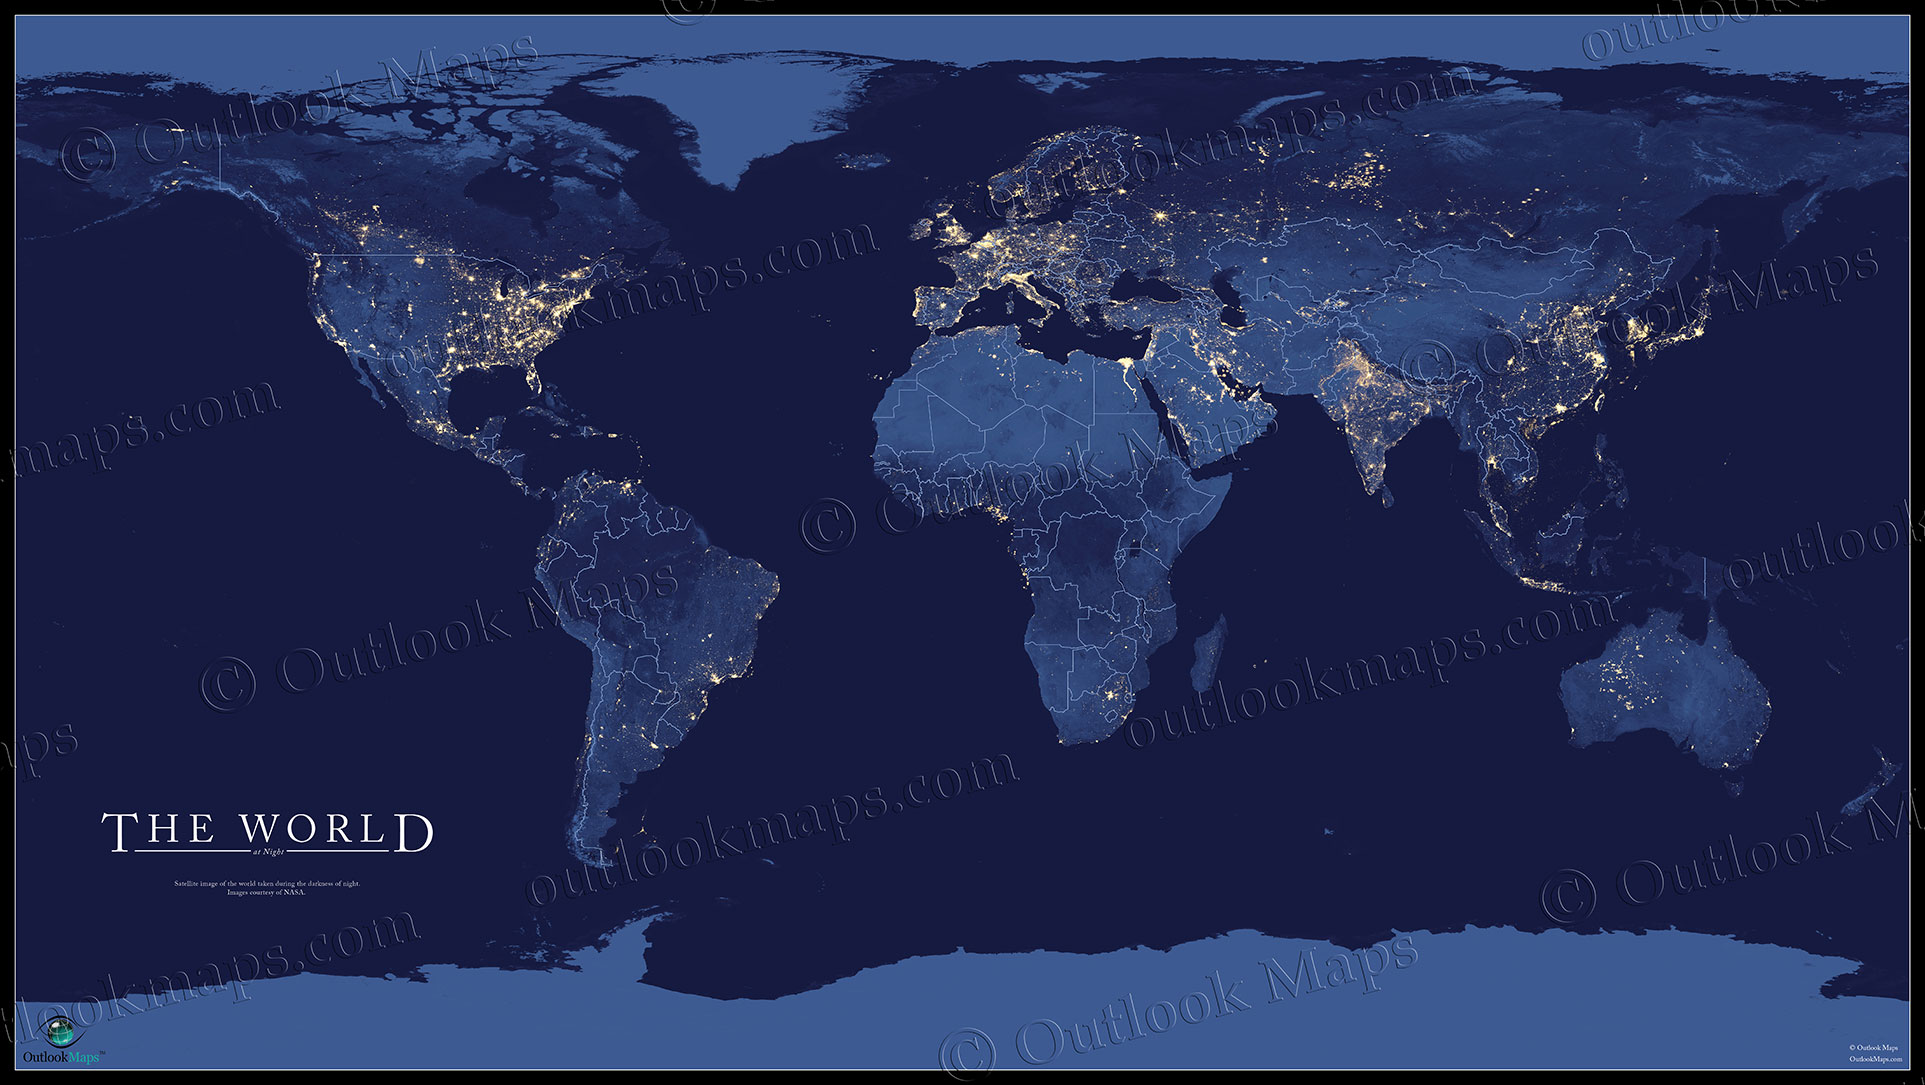 World Map at Night | NASA Satellite View of City Lights